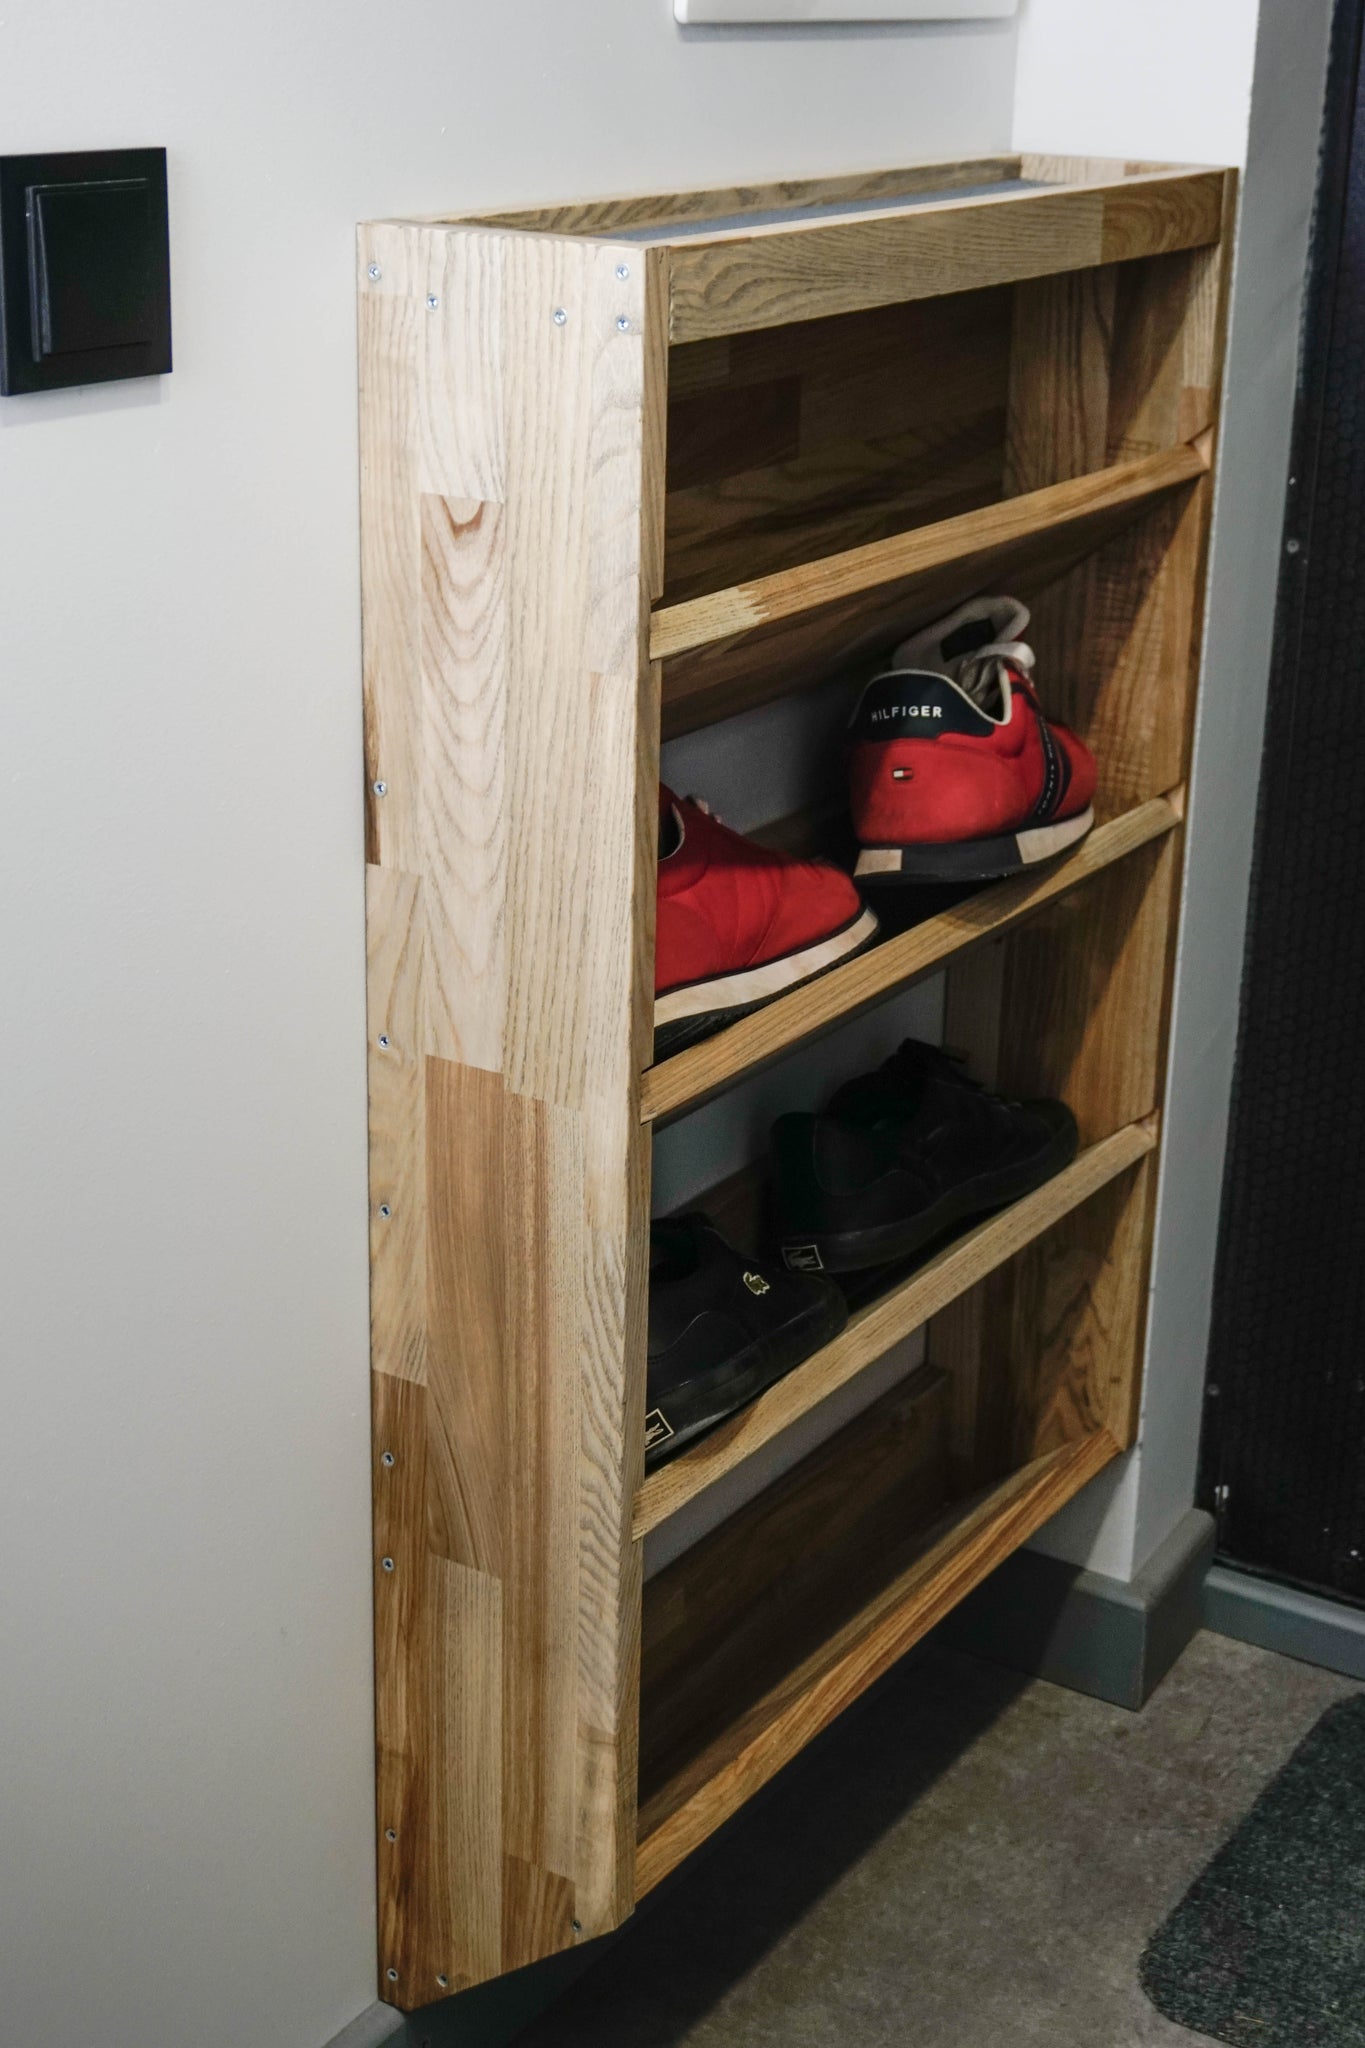 Wooden Shoe Rack, Wood Shoe Shelf –